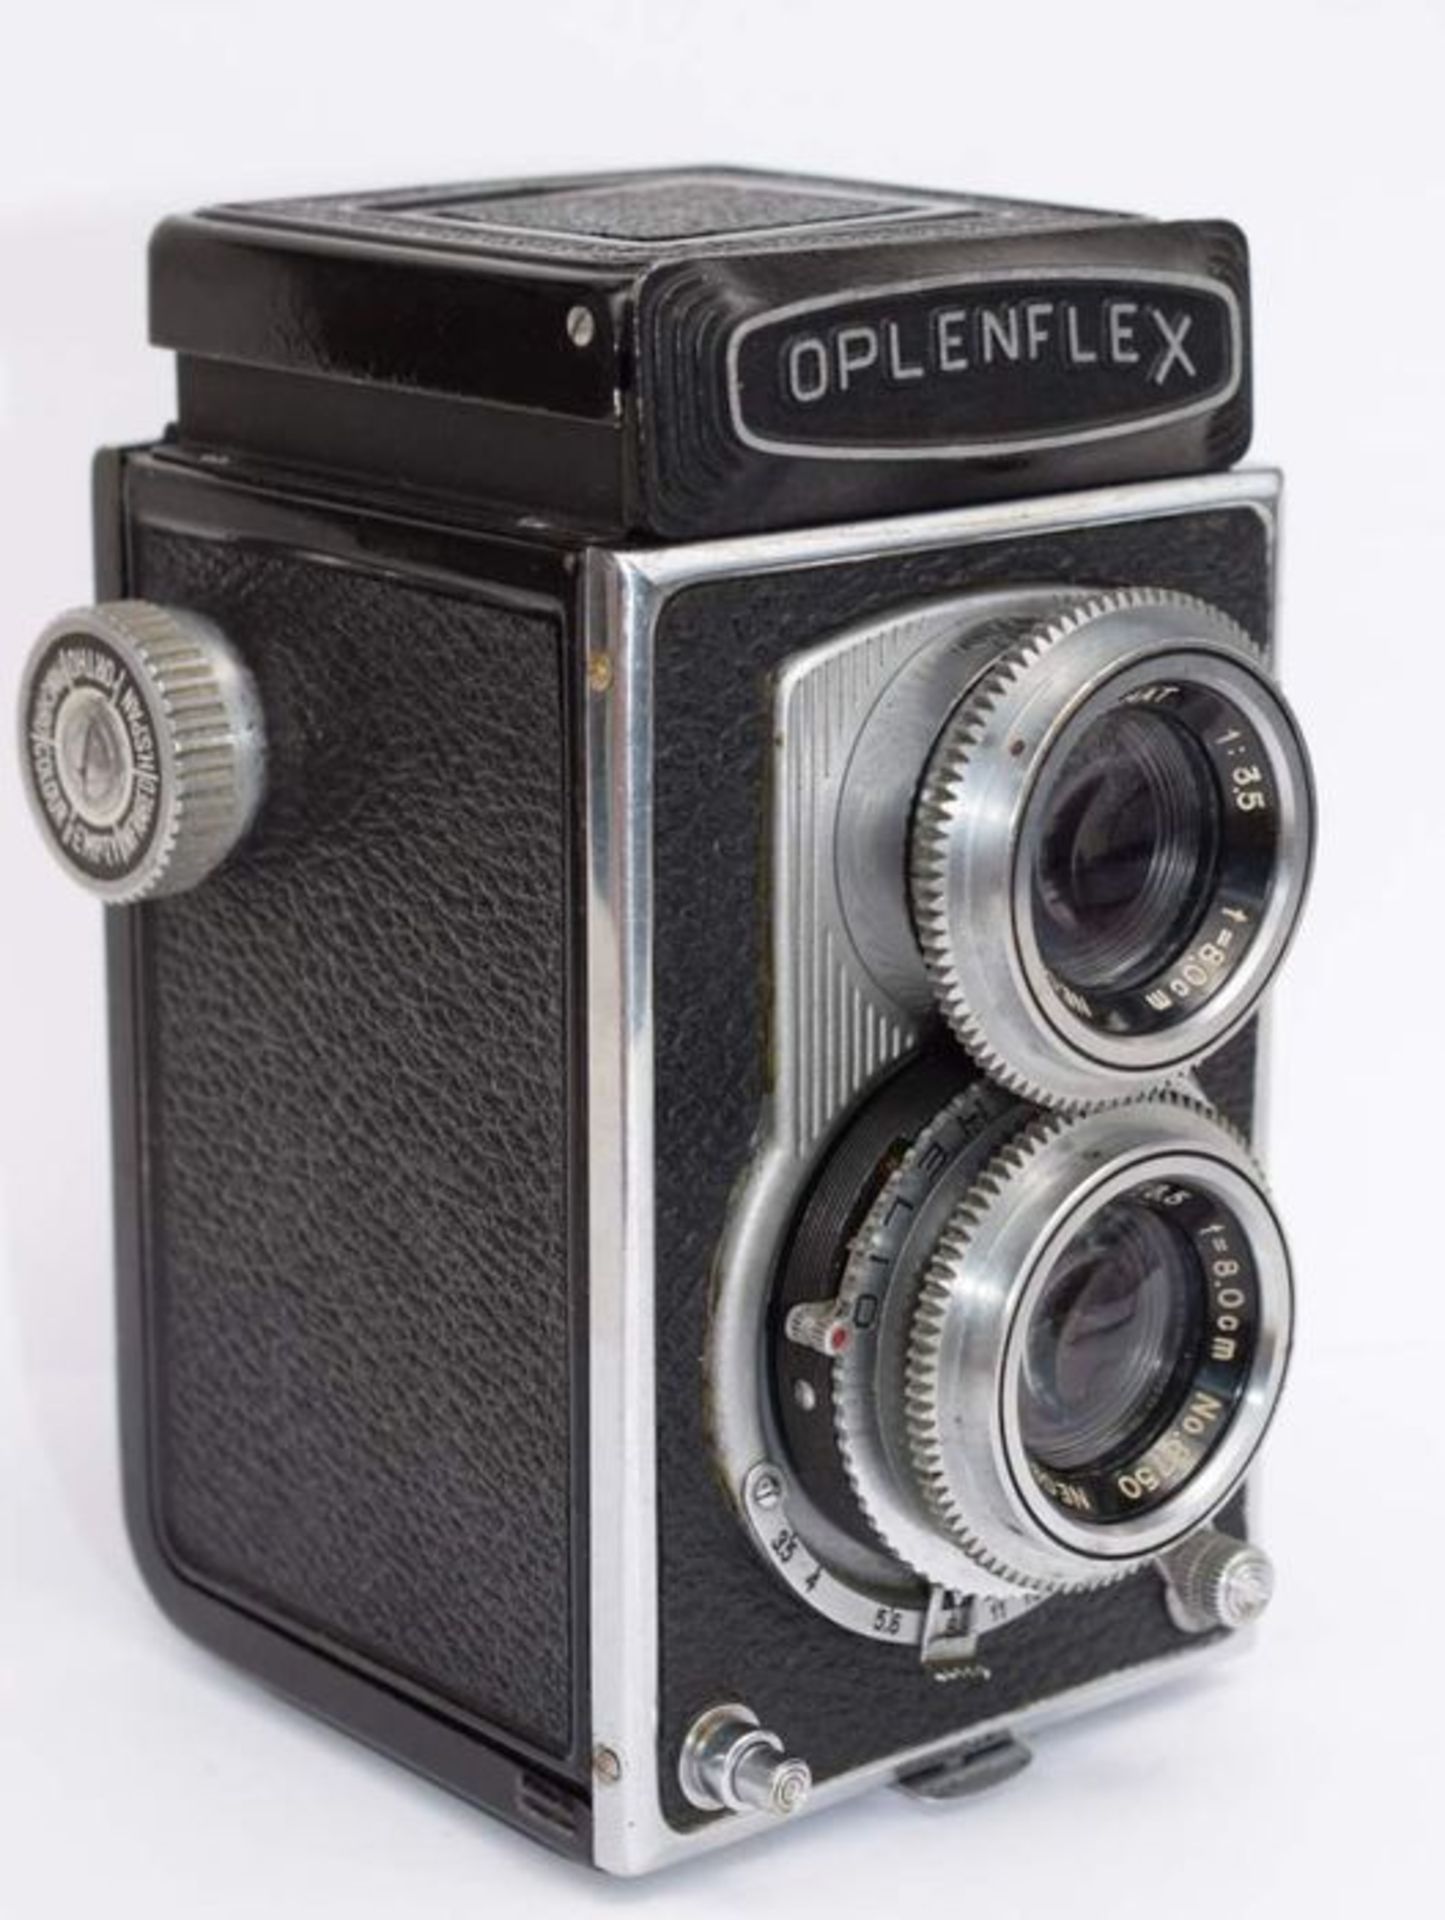 Rare Oplenflex TLR Camera by Tokiwa Seiki Works in Tokyo, Japan